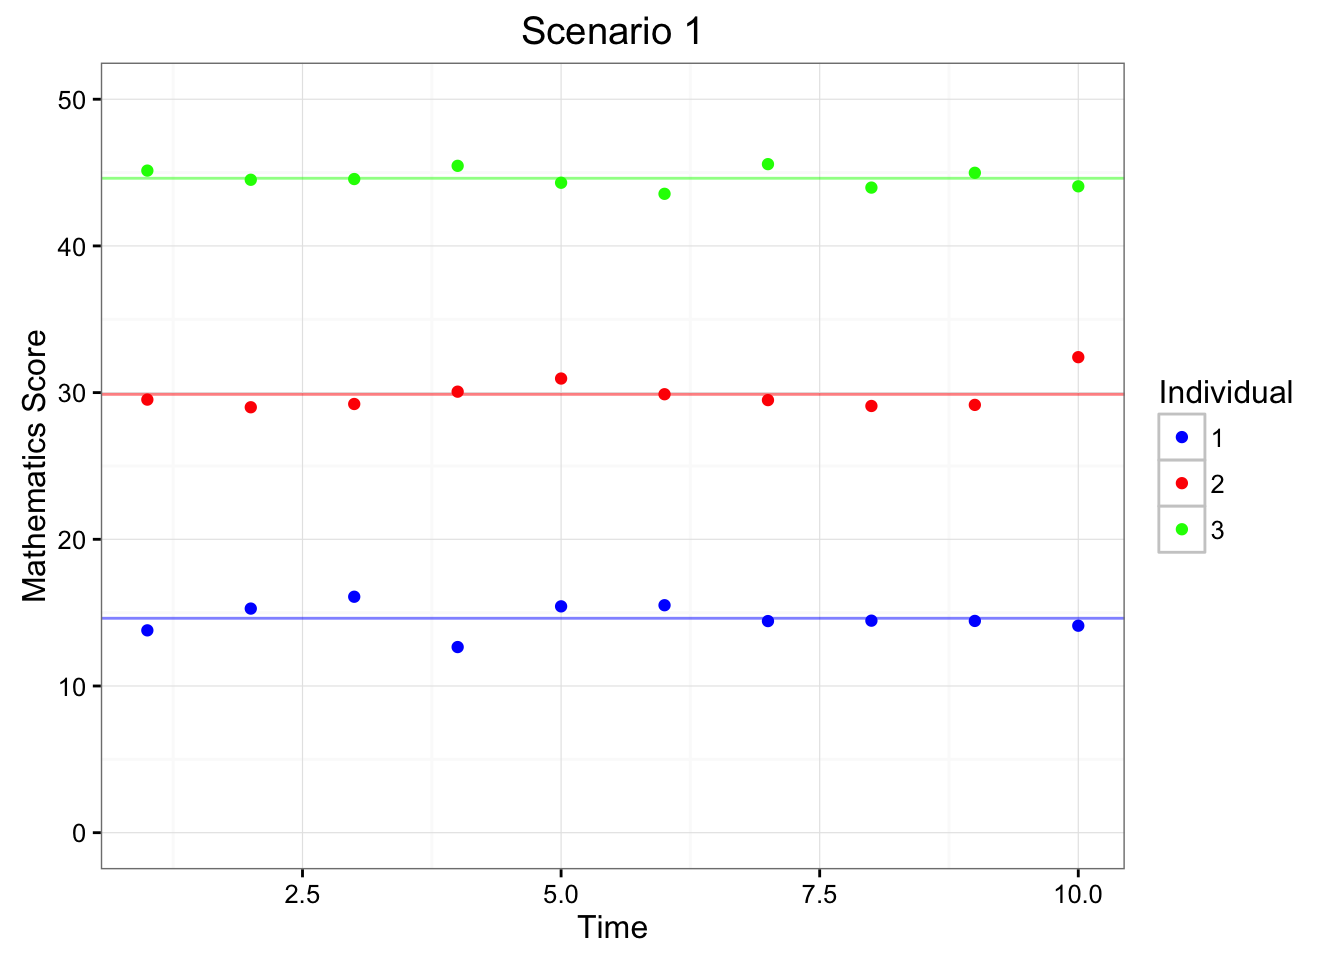 Depiction of Scenarios 1 & 2 Using Longitudinal Data